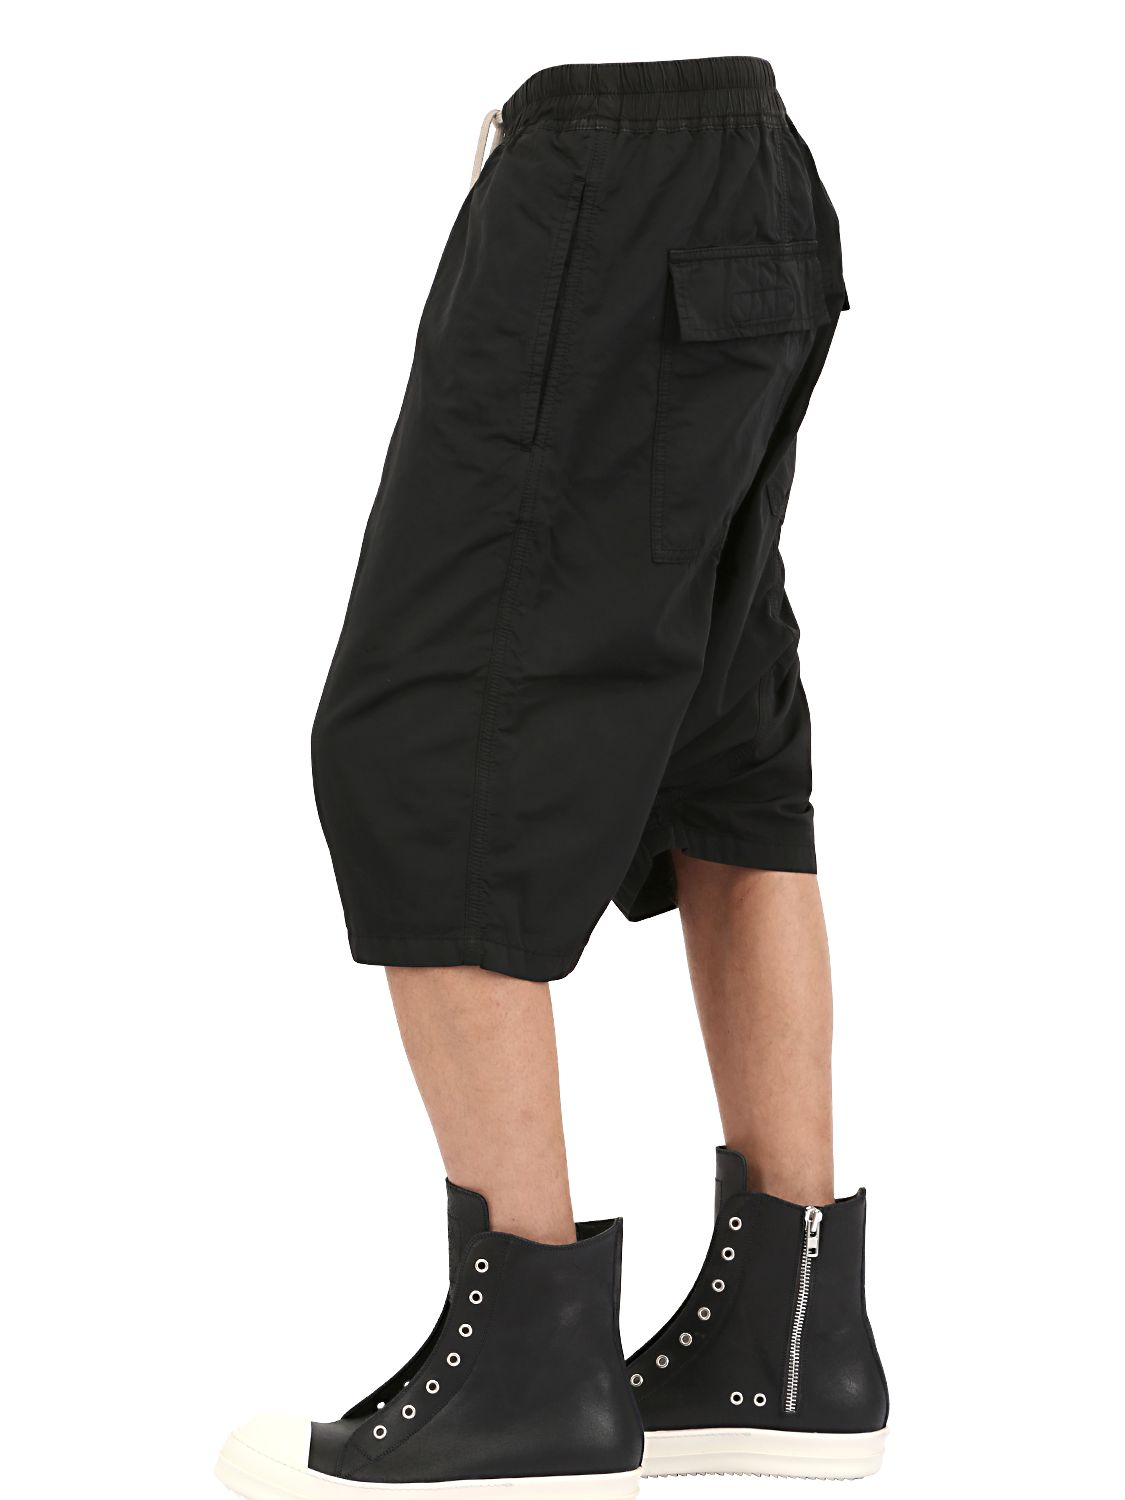 Lyst - Rick Owens Drkshdw Cotton Nylon Shorts in Black for Men